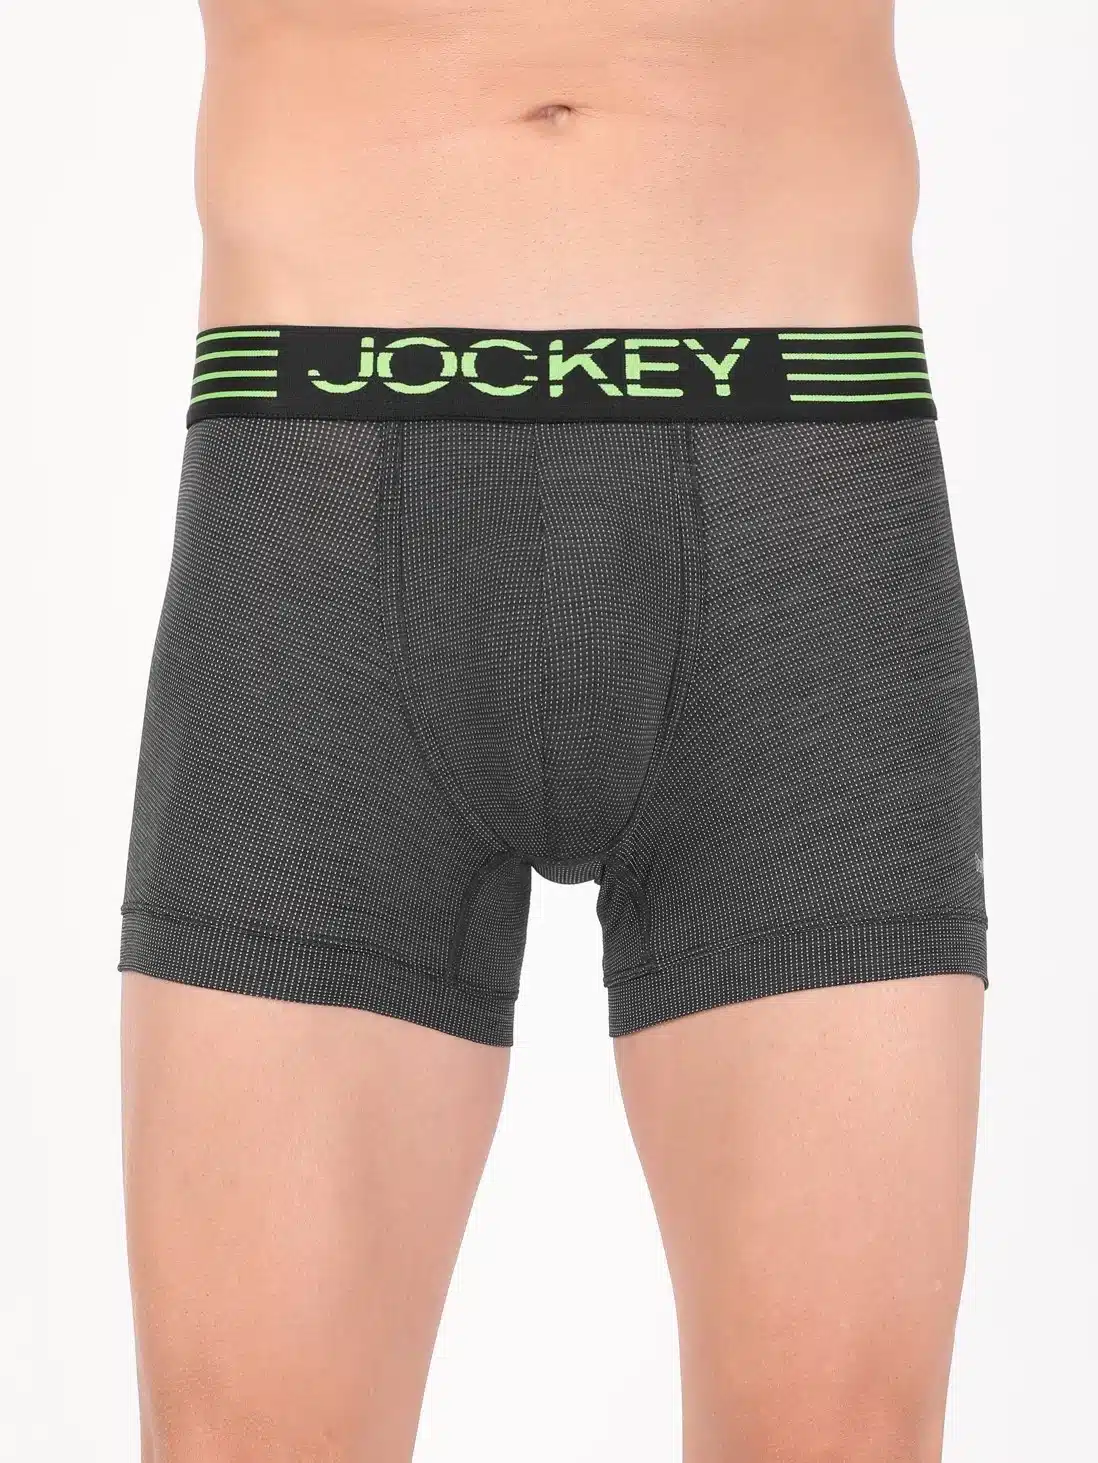 jockey trunks